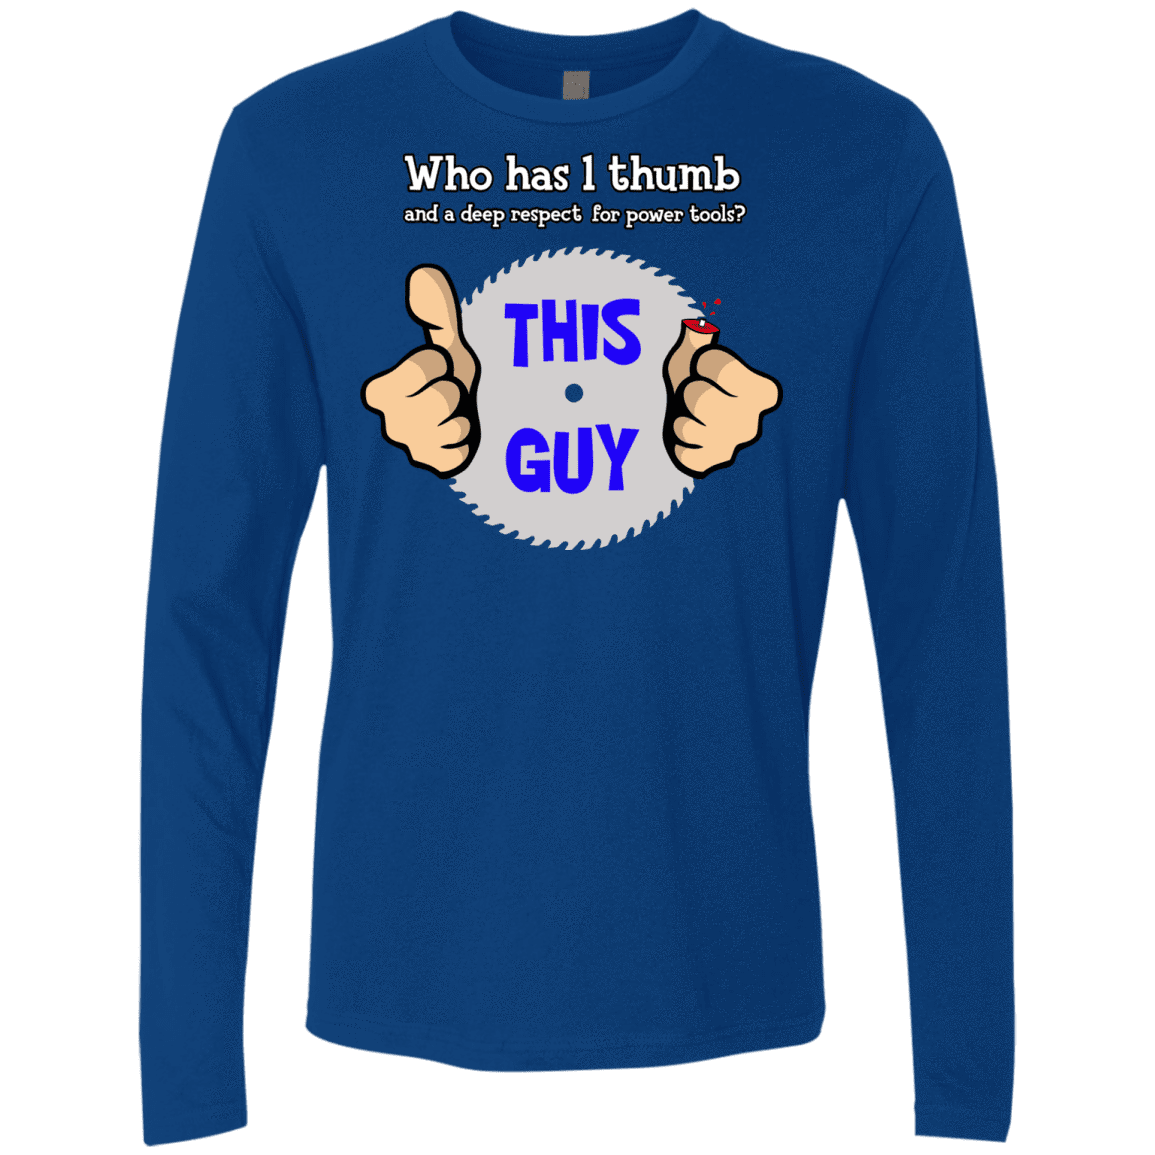 T-Shirts Royal / Small 1-thumb Men's Premium Long Sleeve